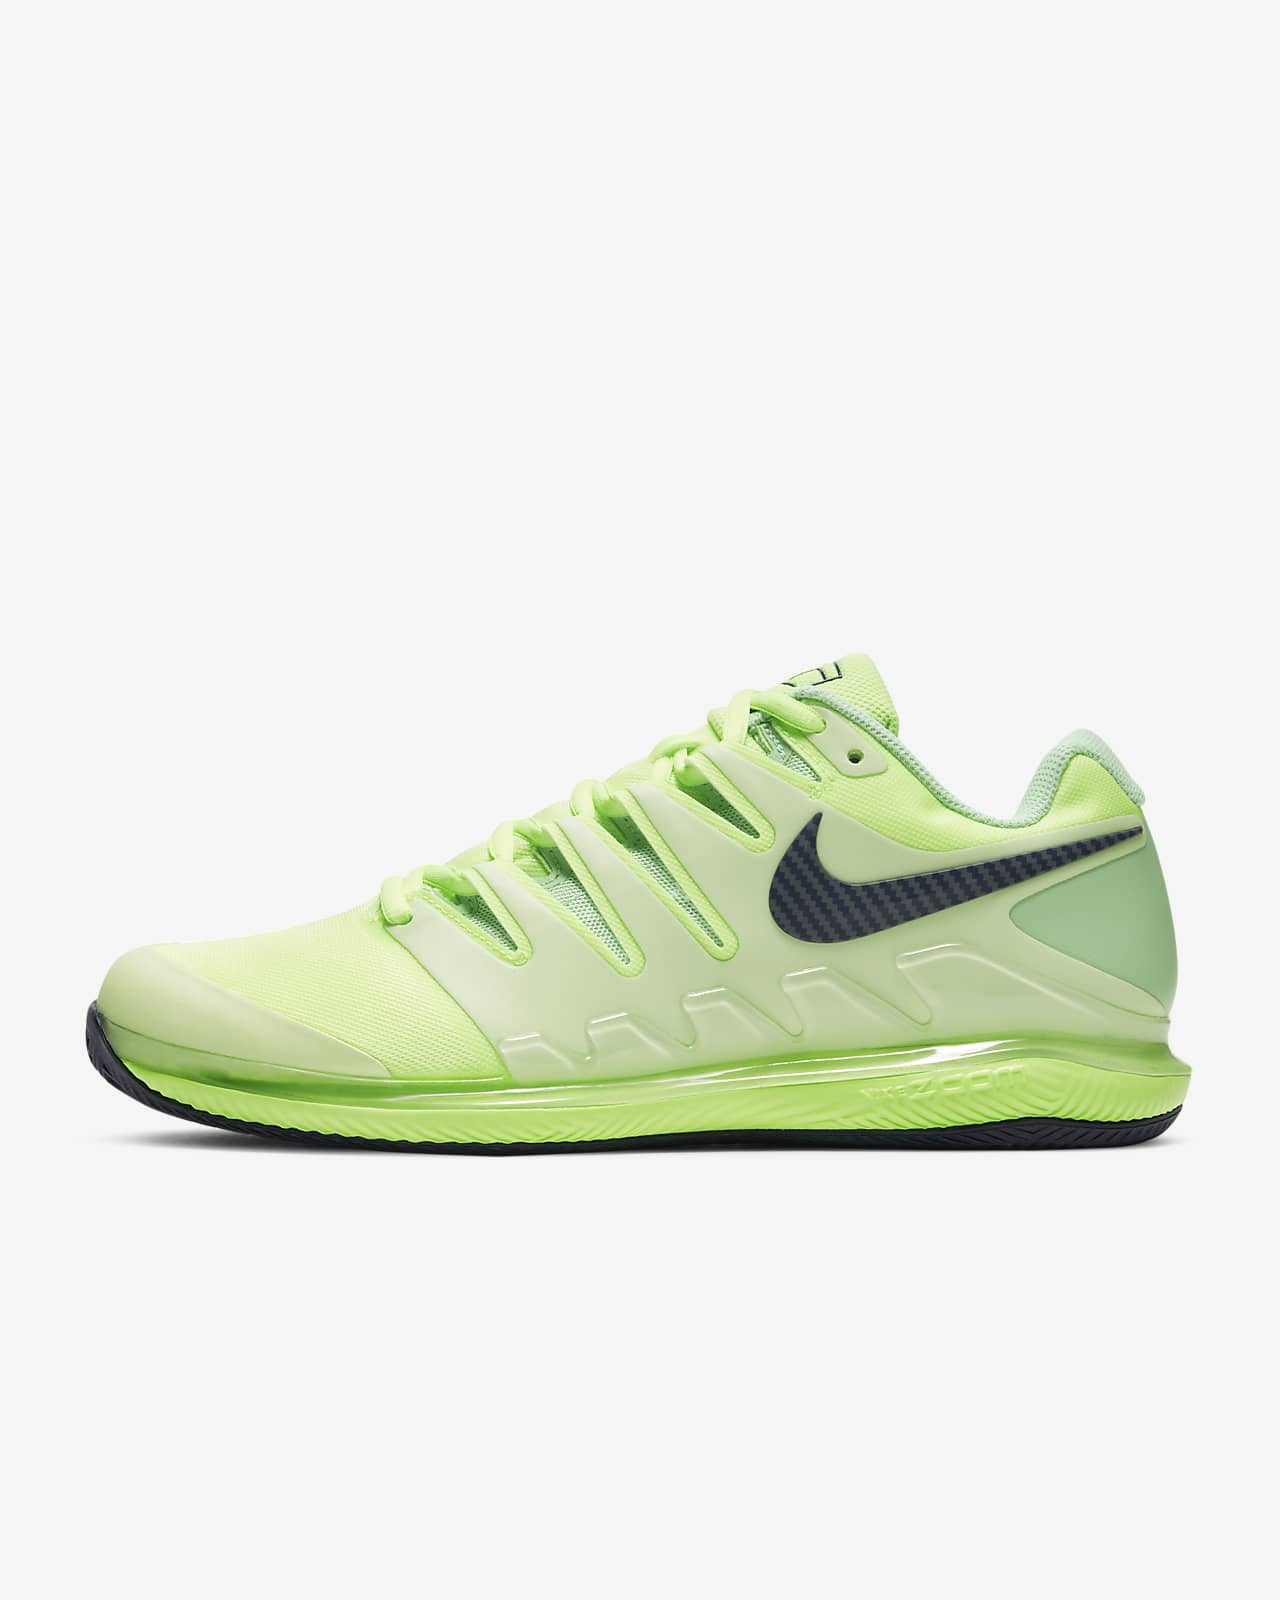 NikeCourt Air Zoom Vapor X Men's Clay Tennis Shoe. Nike EG